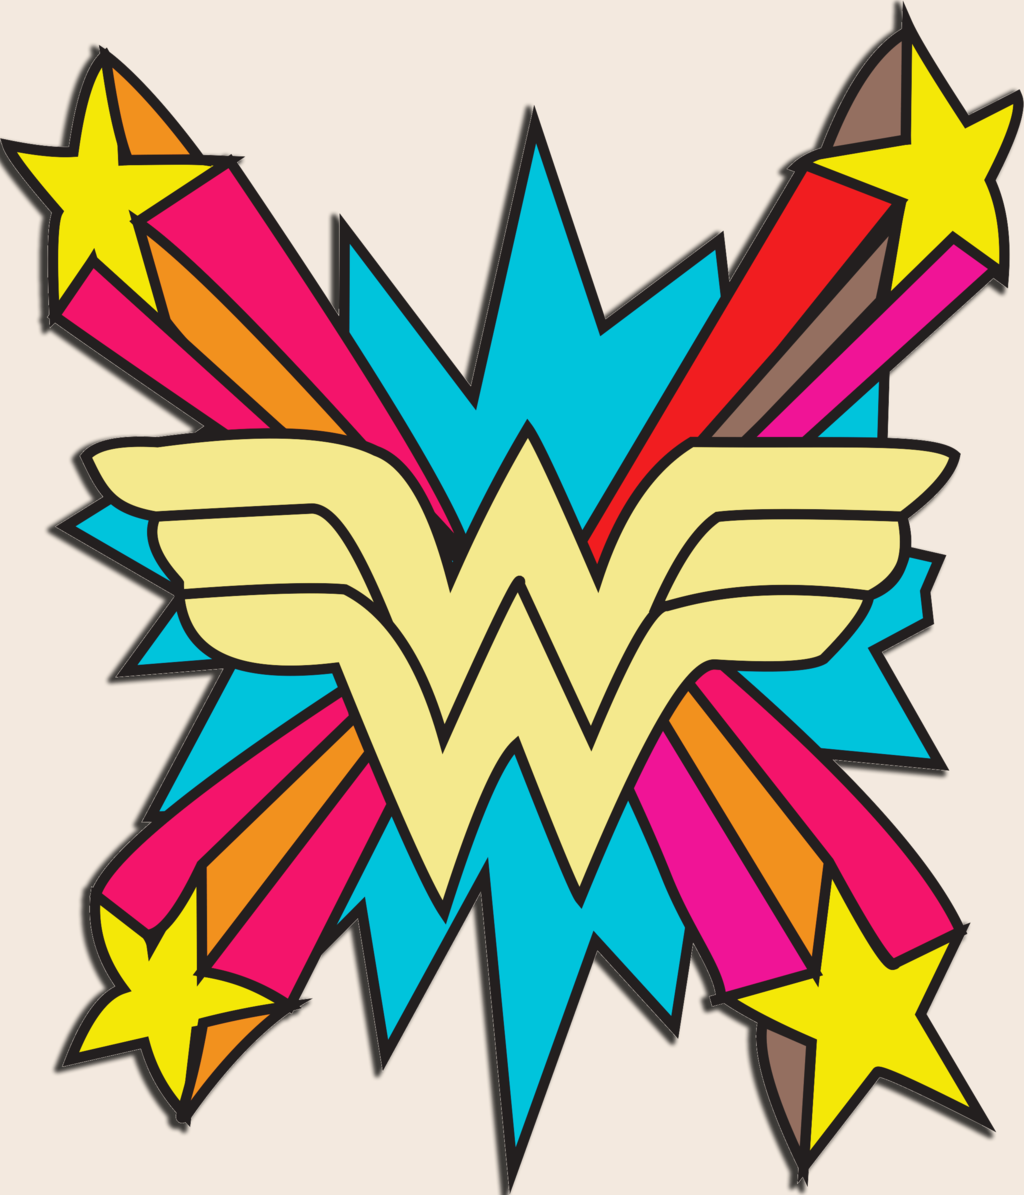 wonder woman logo